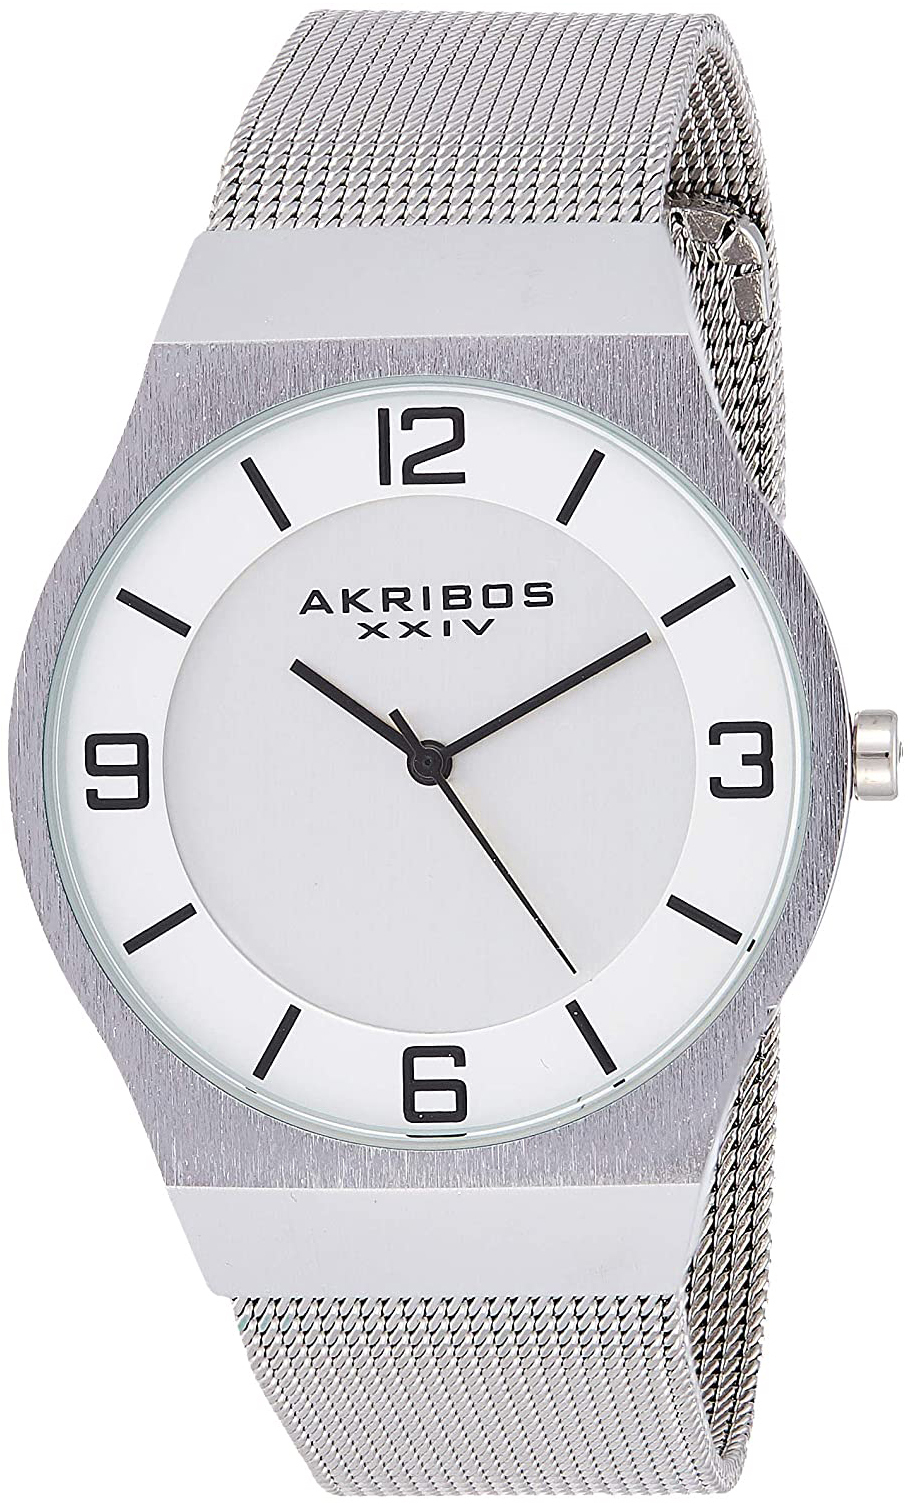 Akribos XXIV 99999 Herrklocka AK851SS Silverfärgad/Stål Ø40 mm - Akribos XXIV